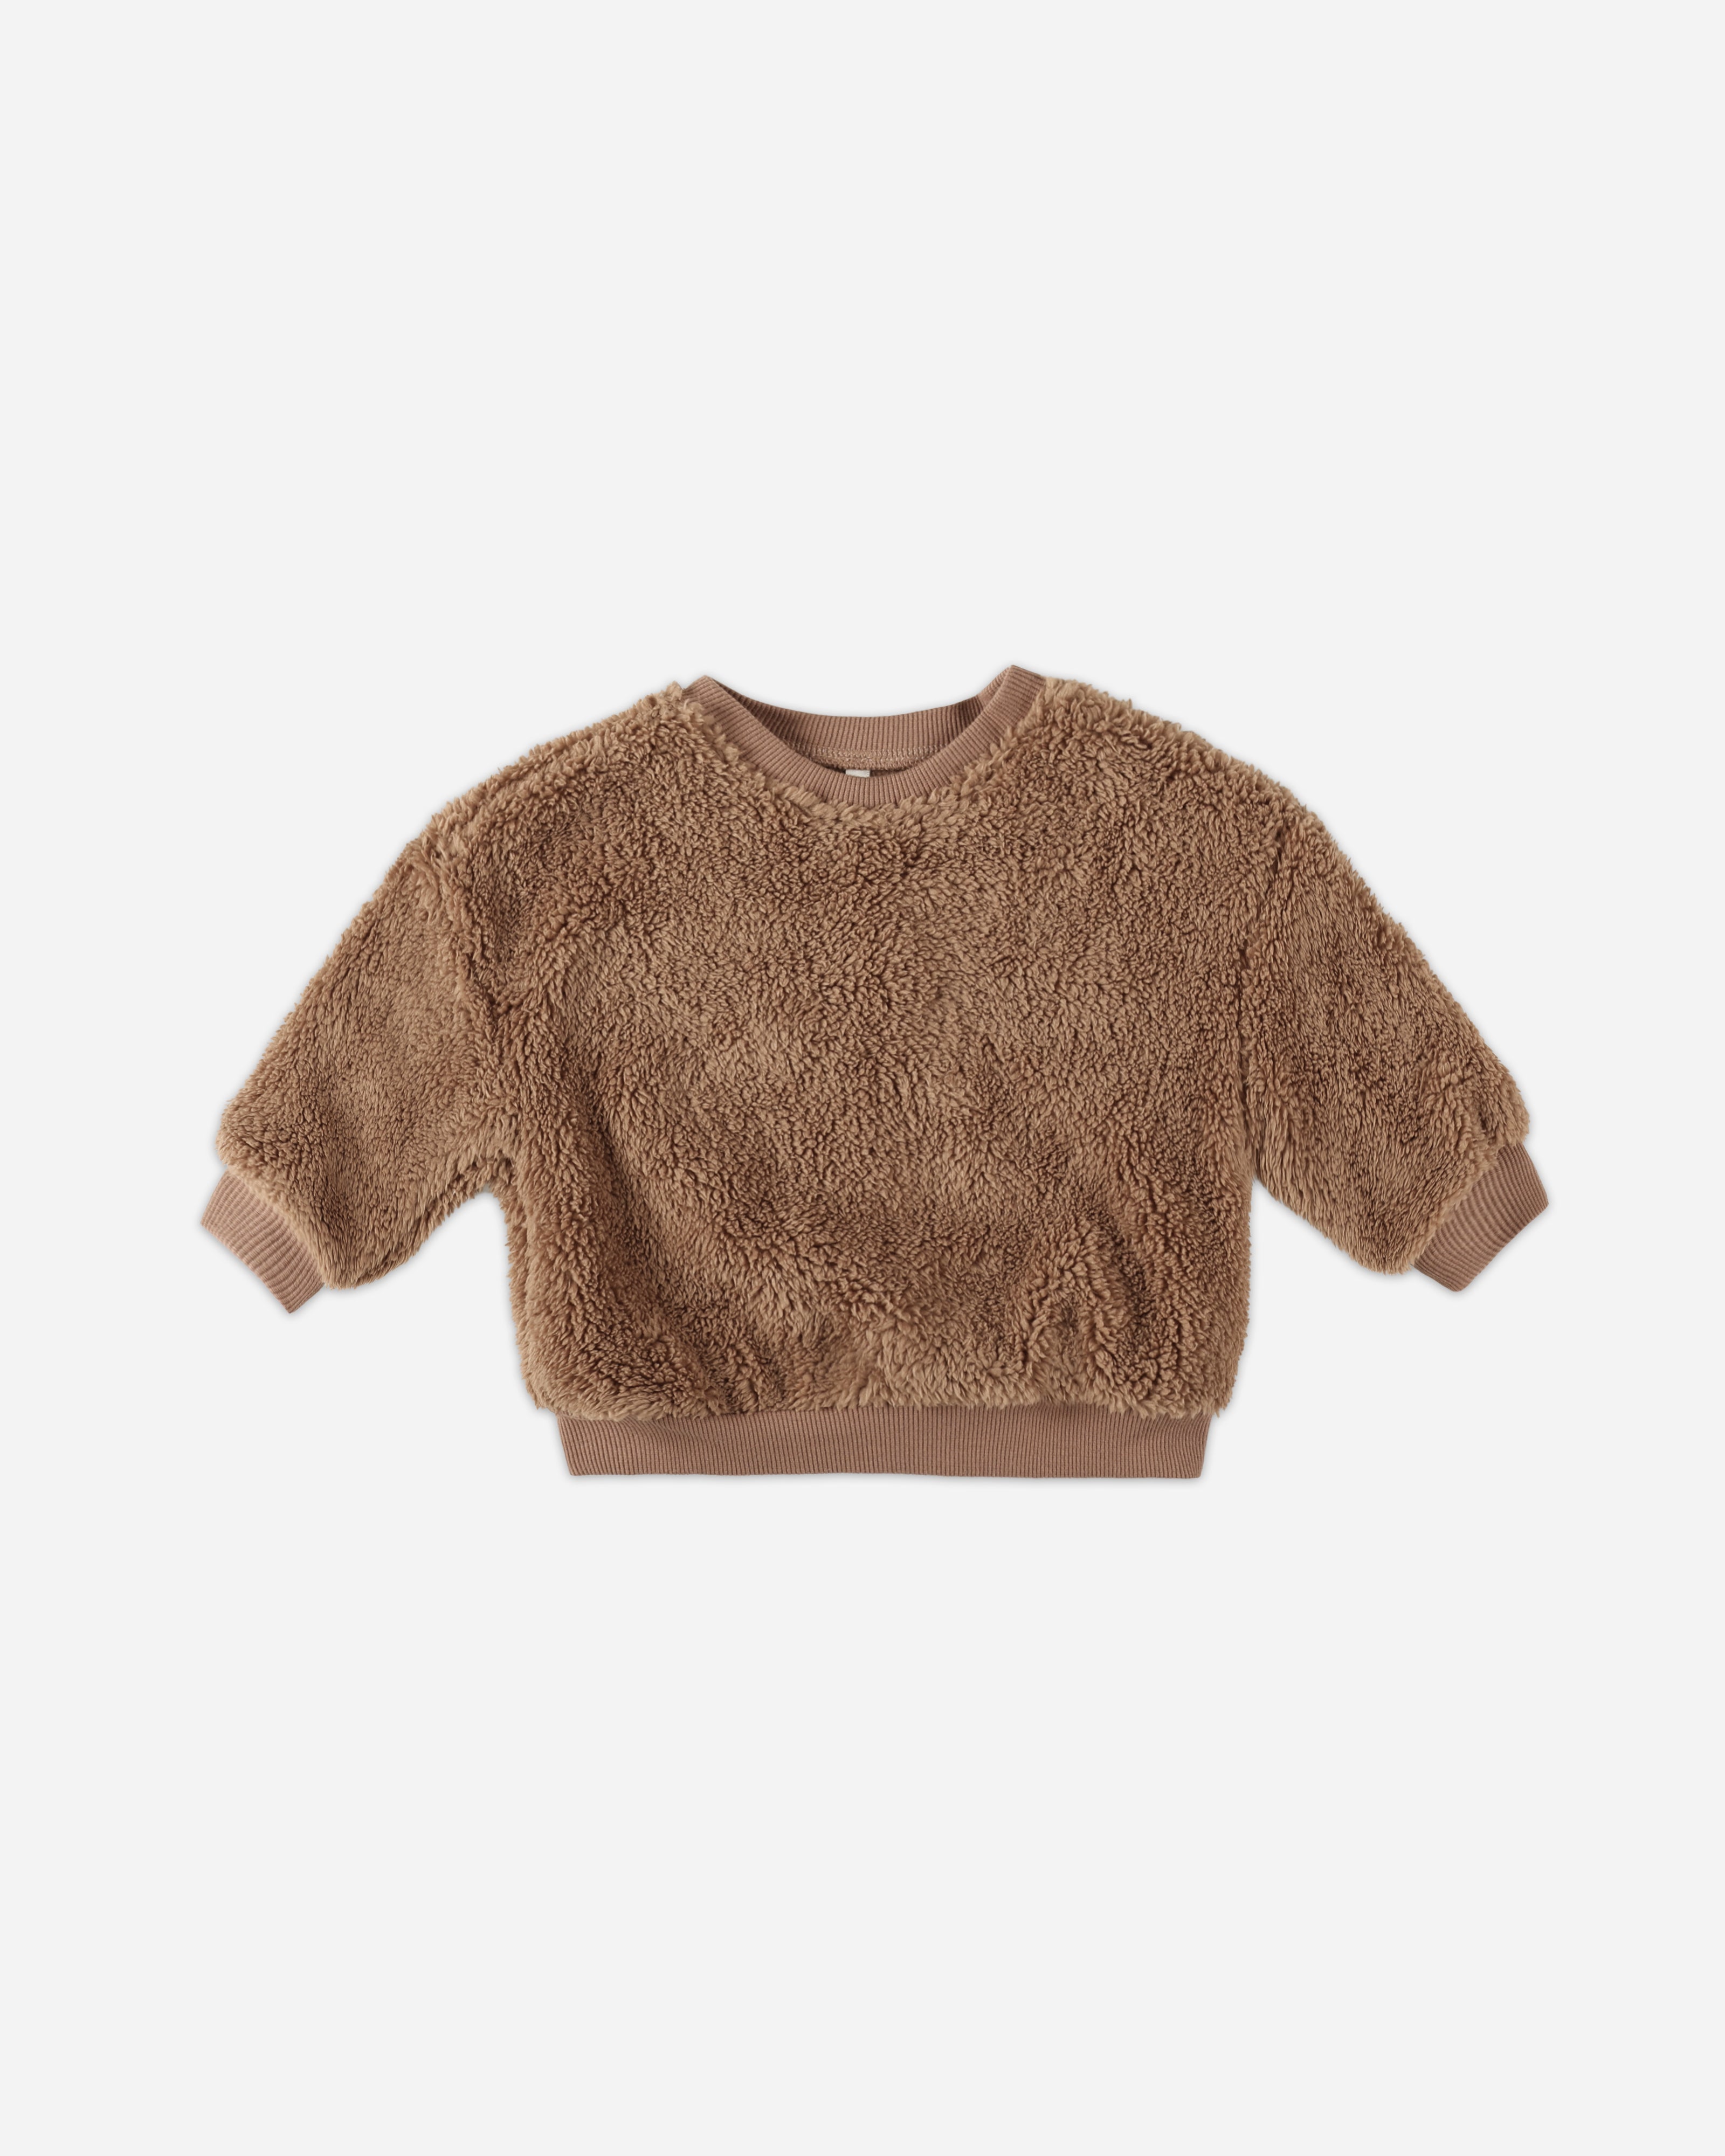 Drop Shoulder Sweatshirt || Caramel - Rylee + Cru | Kids Clothes | Trendy Baby Clothes | Modern Infant Outfits |